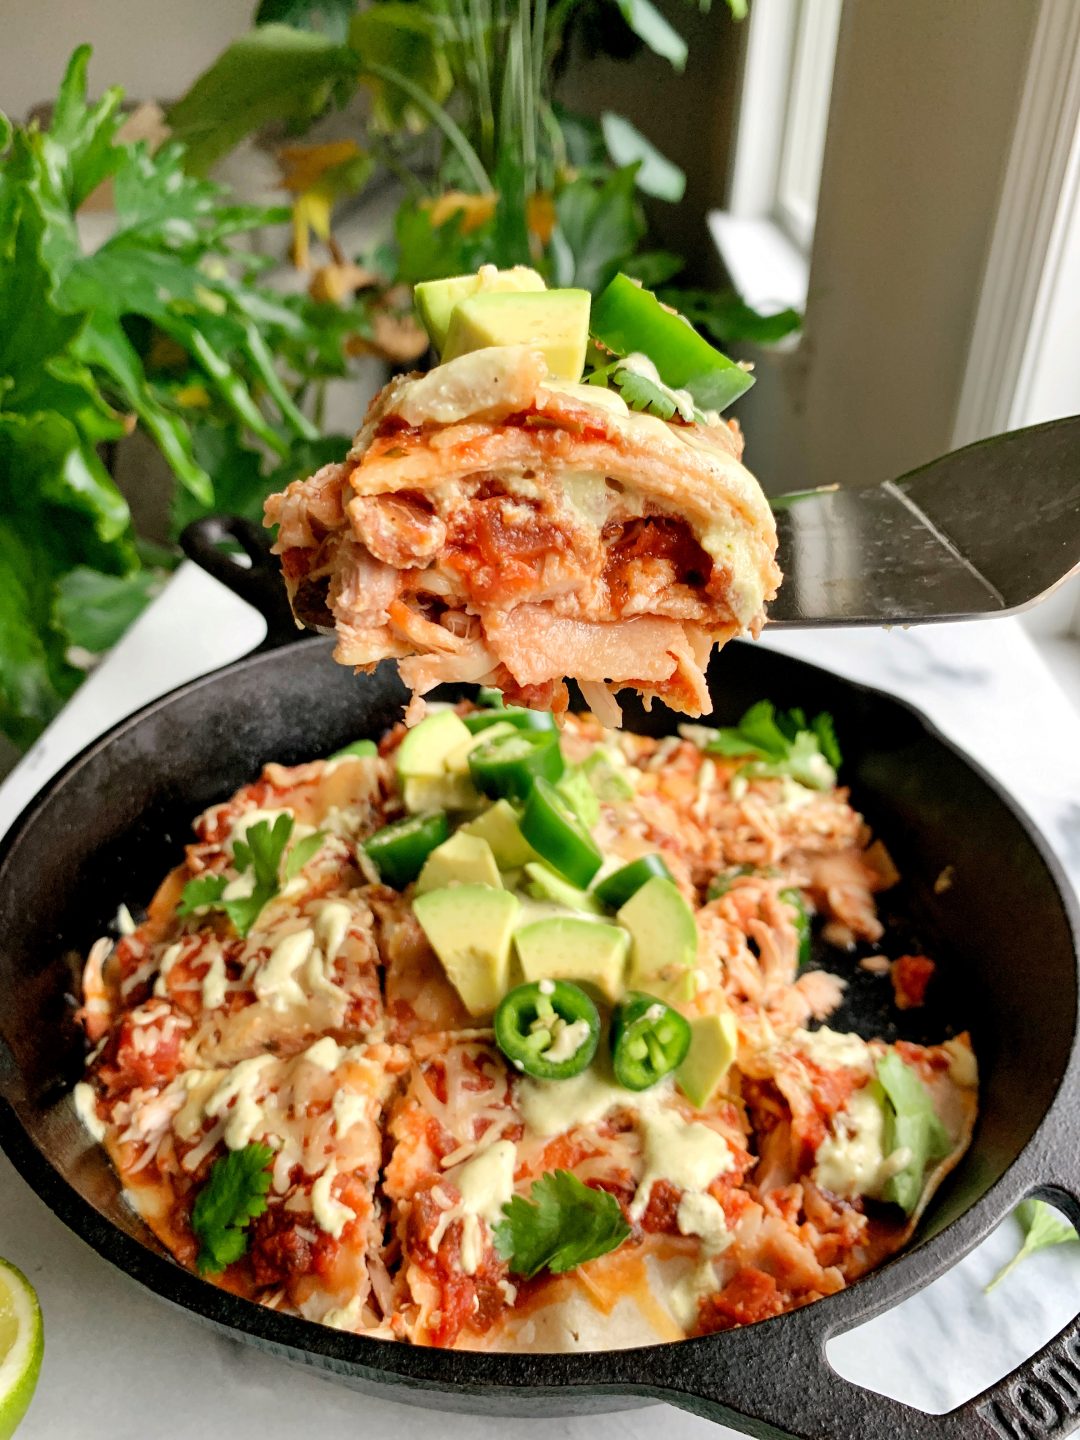 EASY Gluten-free Chicken Enchilada Recipe - rachLmansfield